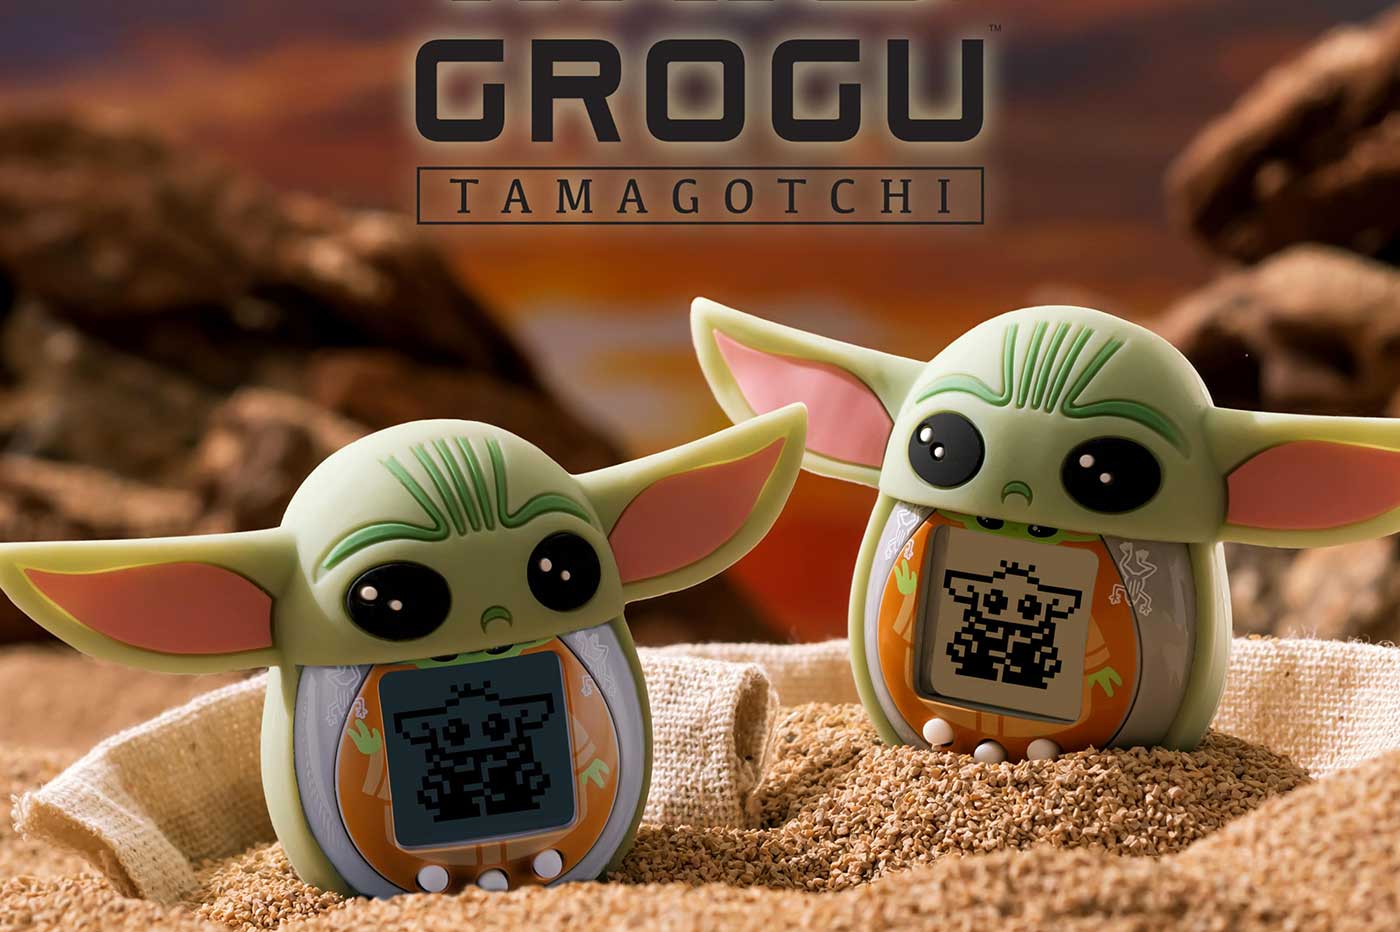 Star Wars Grogu Tamagotchi